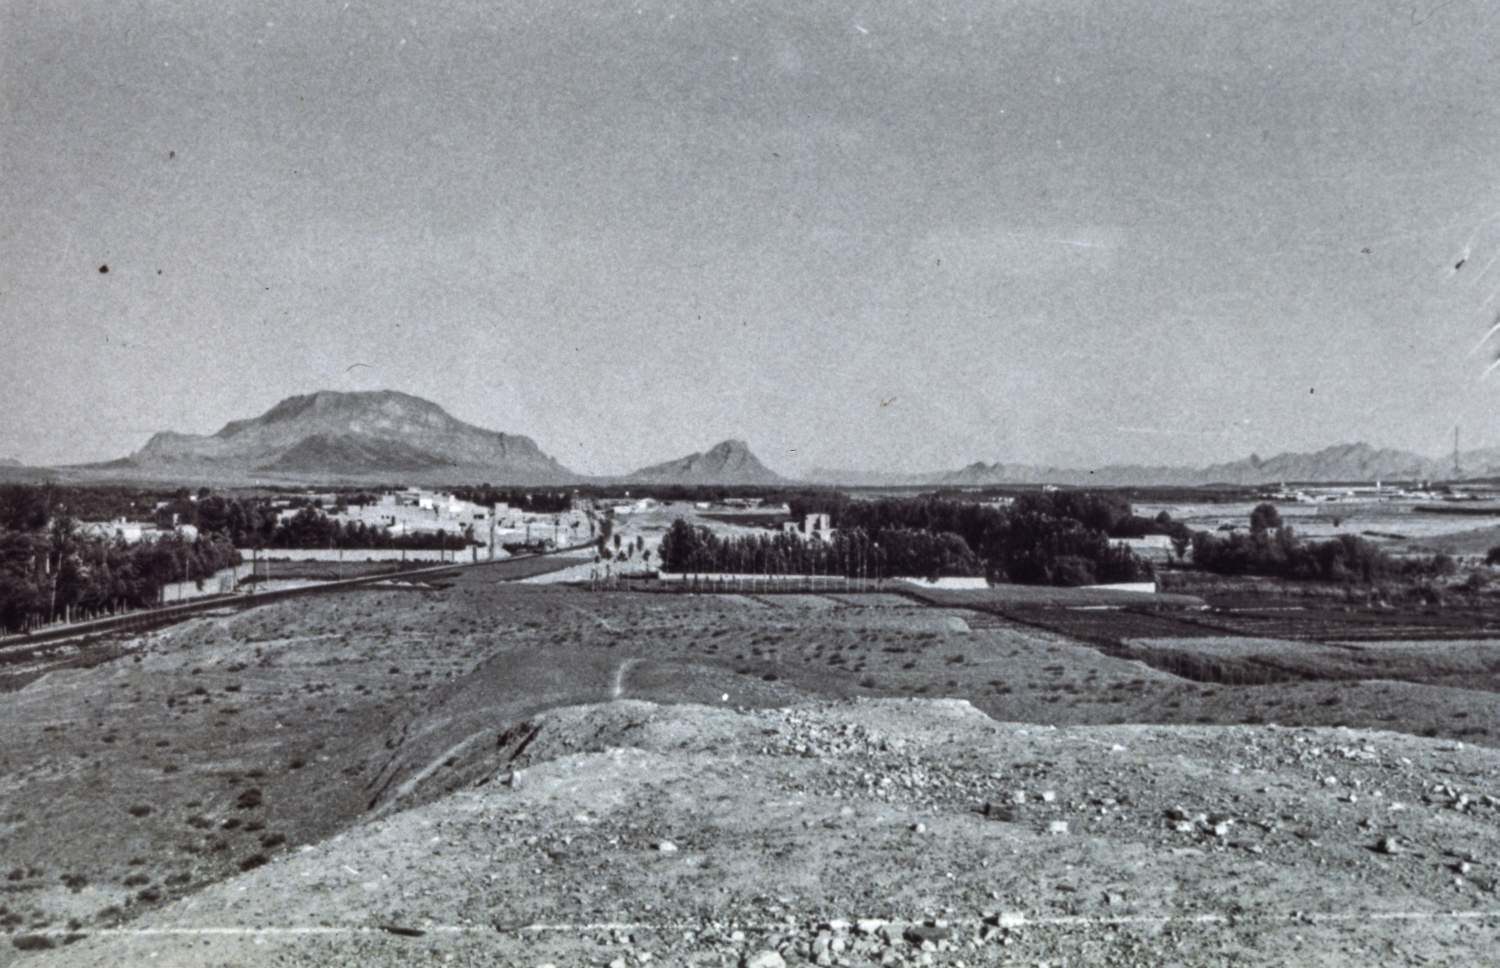 General view over surrounding landscape of Marabin (Marbin) Plain.